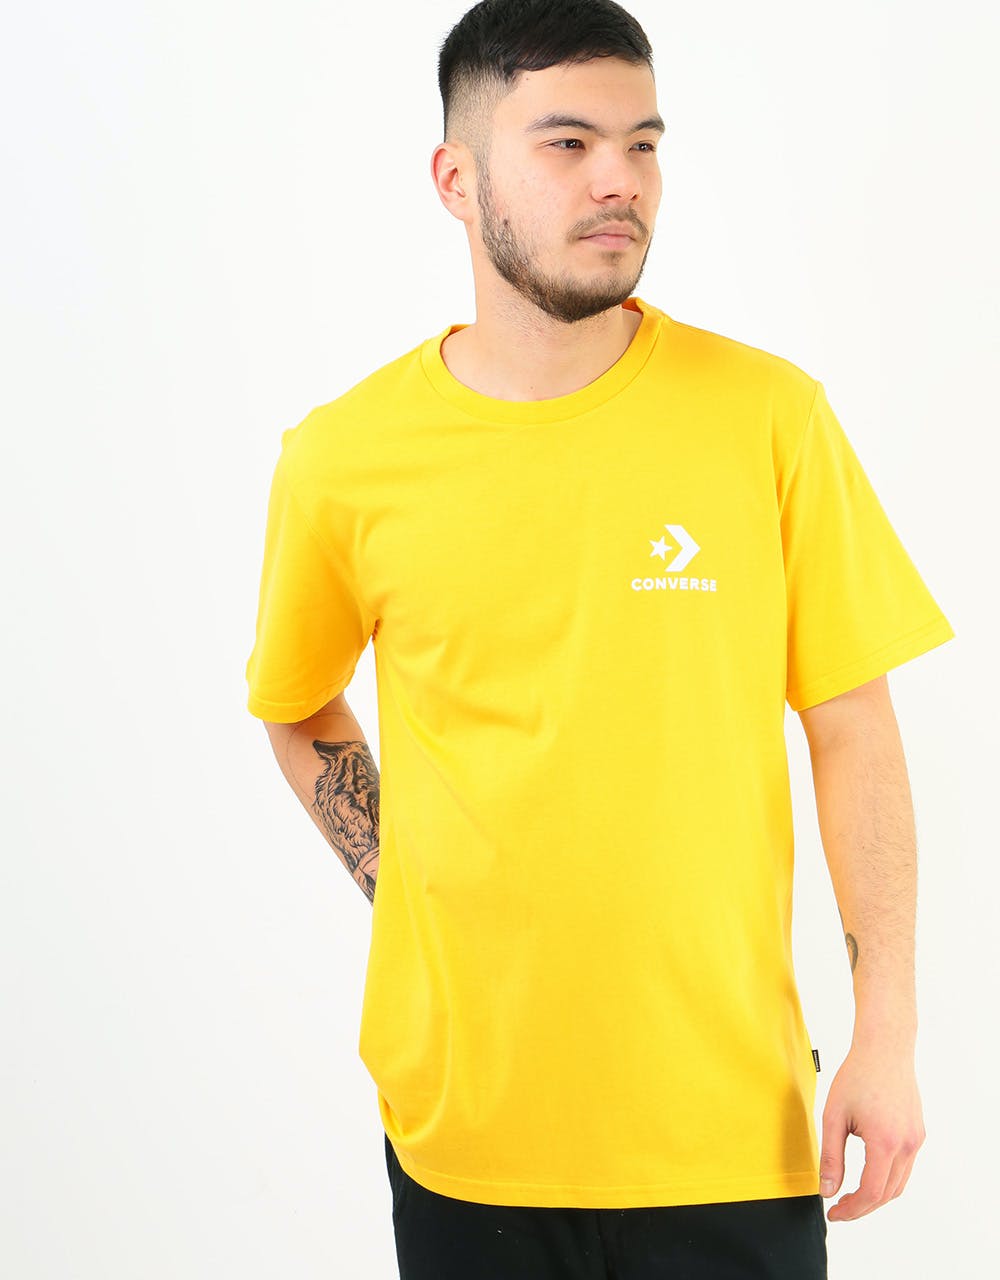 Converse Star Chevron T-Shirt - Amarillo